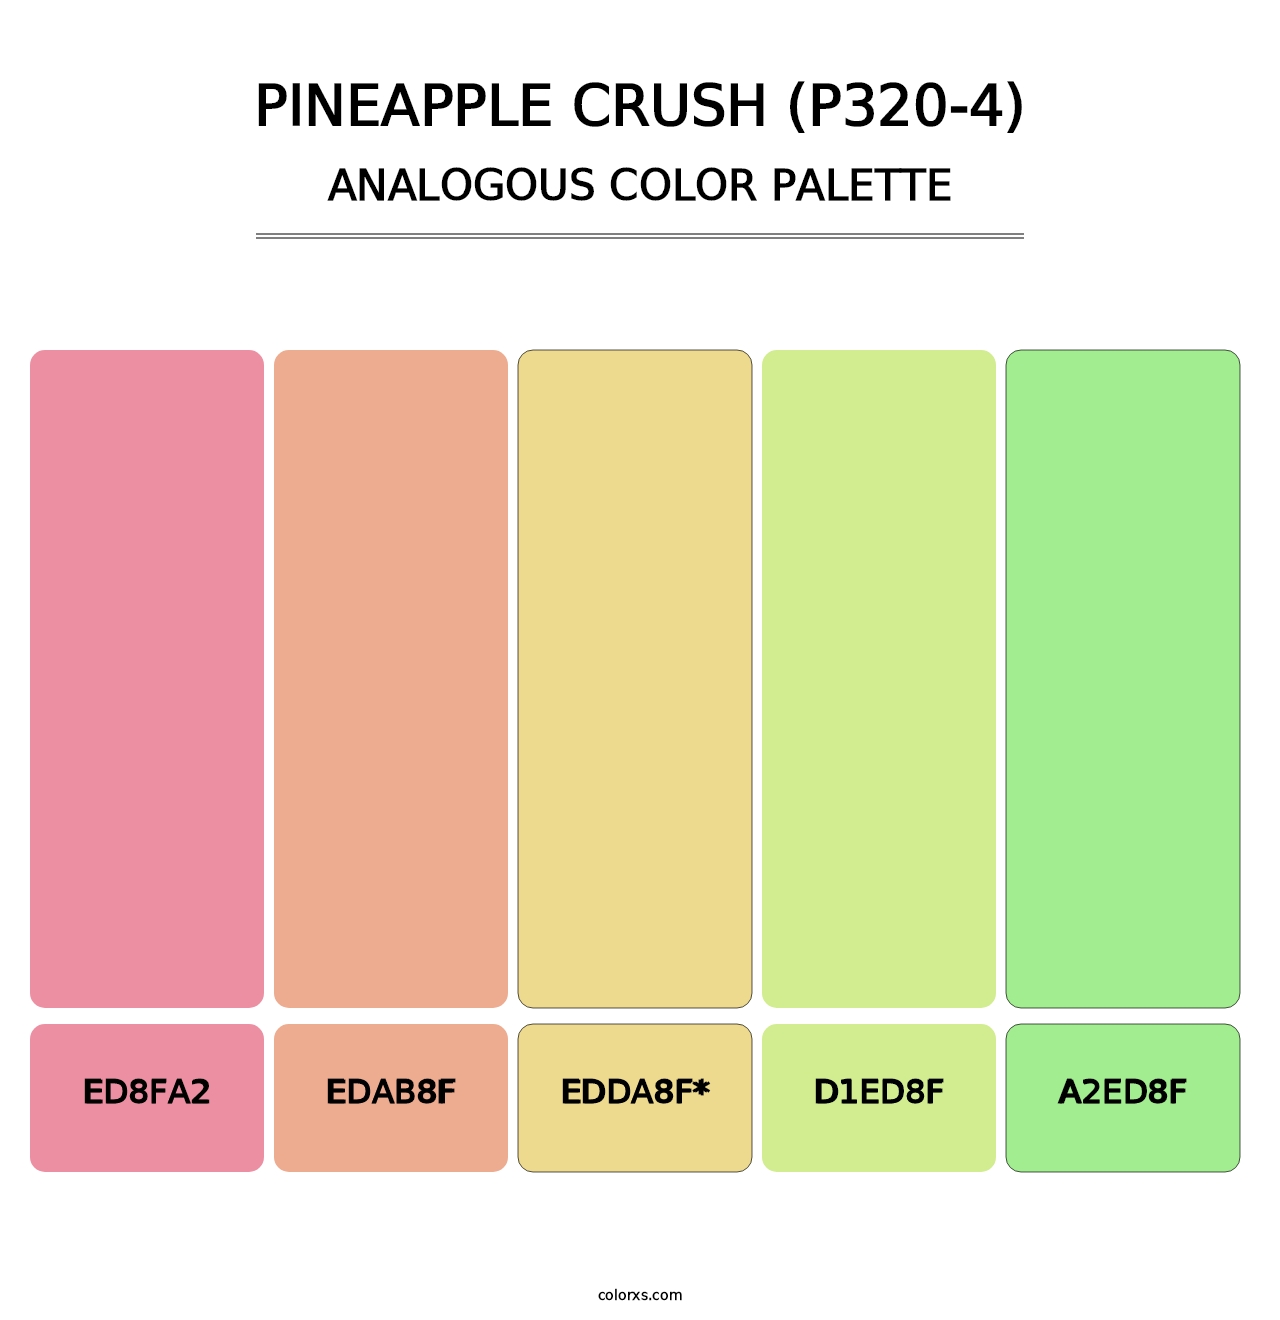 Pineapple Crush (P320-4) - Analogous Color Palette